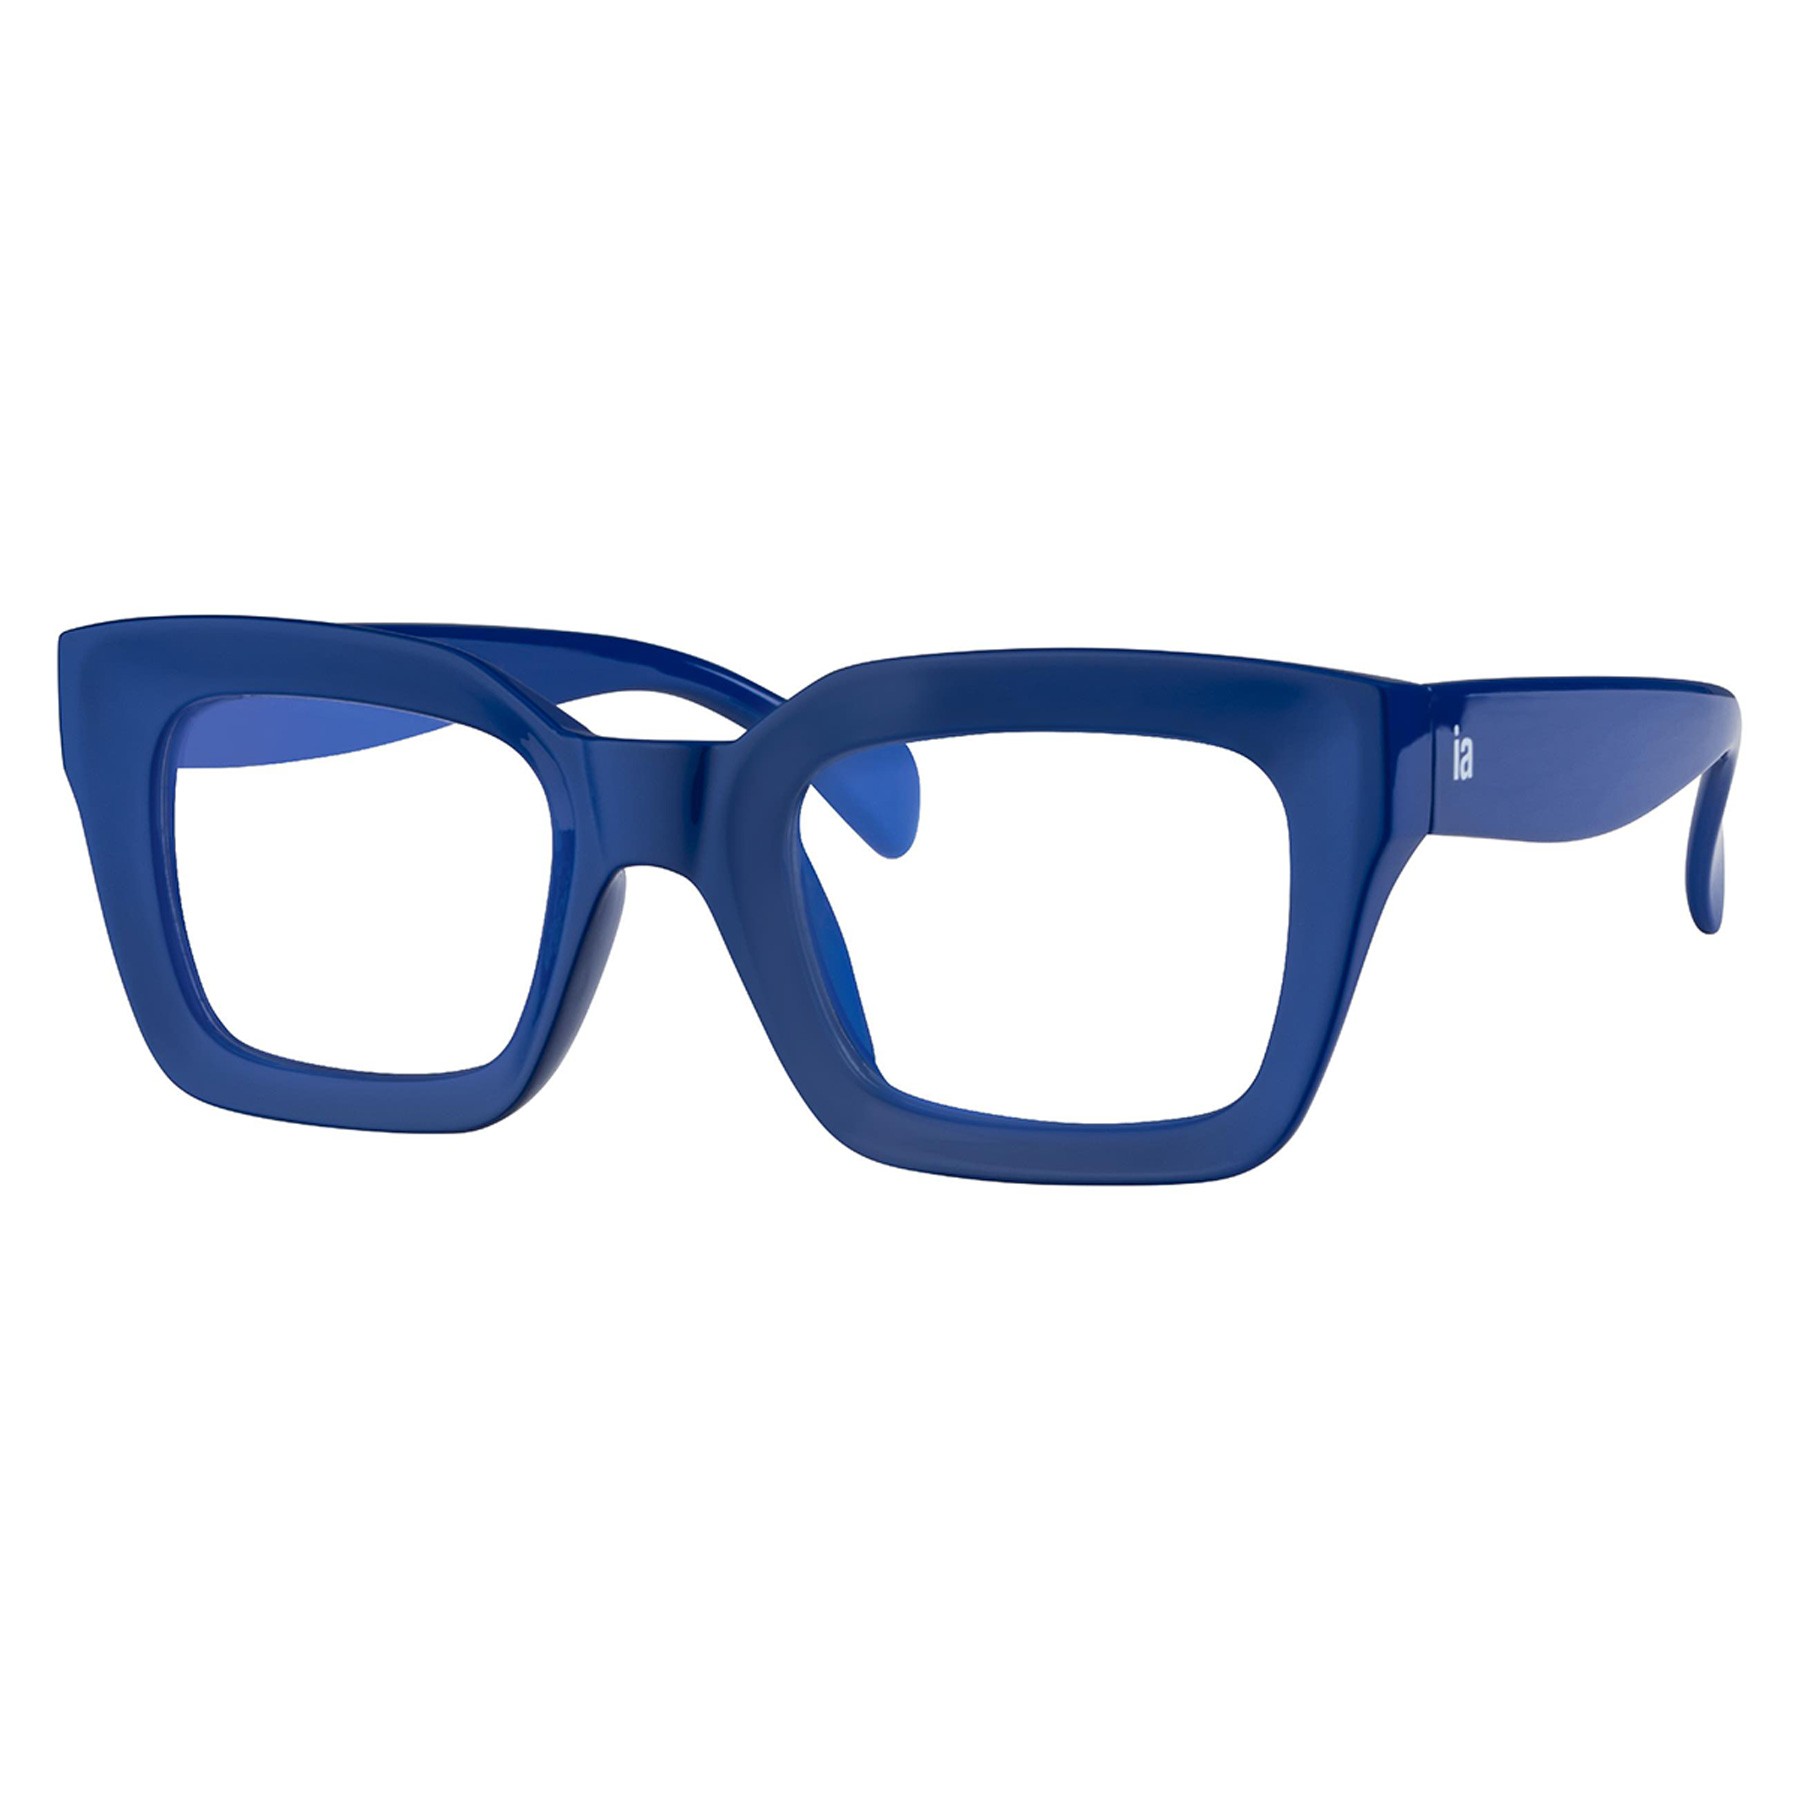 Iaview gafa de presbicia BRERA azul +3,00